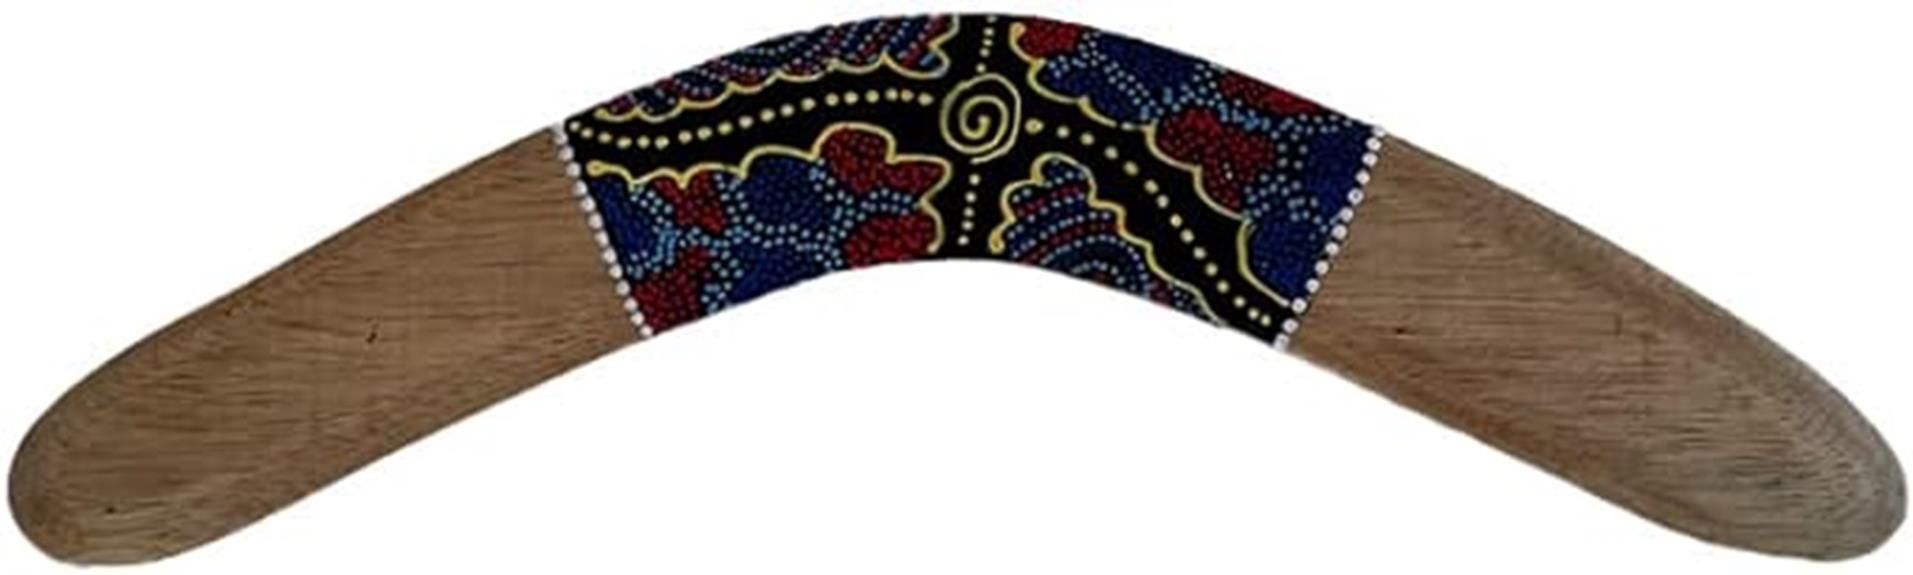 indigenous boomerang art decoration